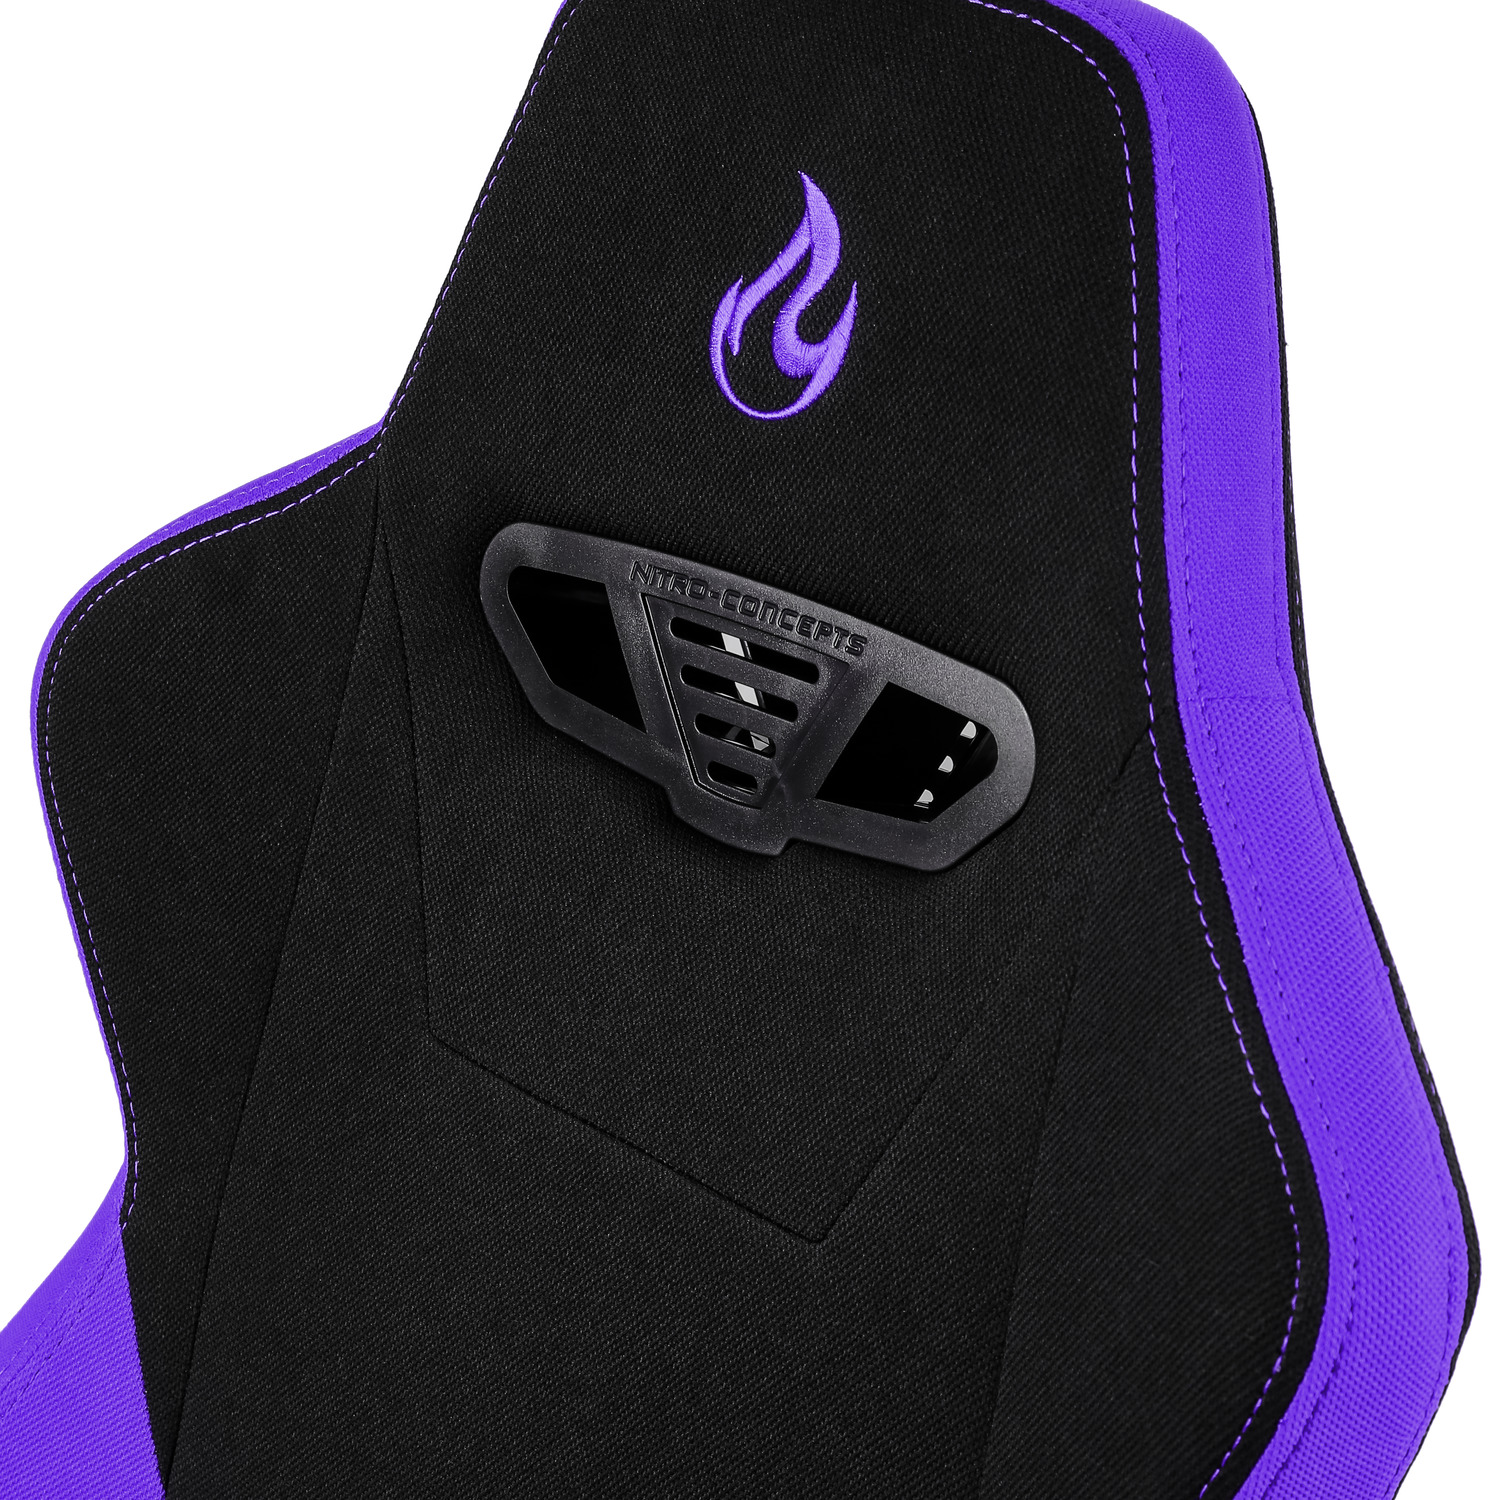 Fauteuil gaming S300 Nebula Purple